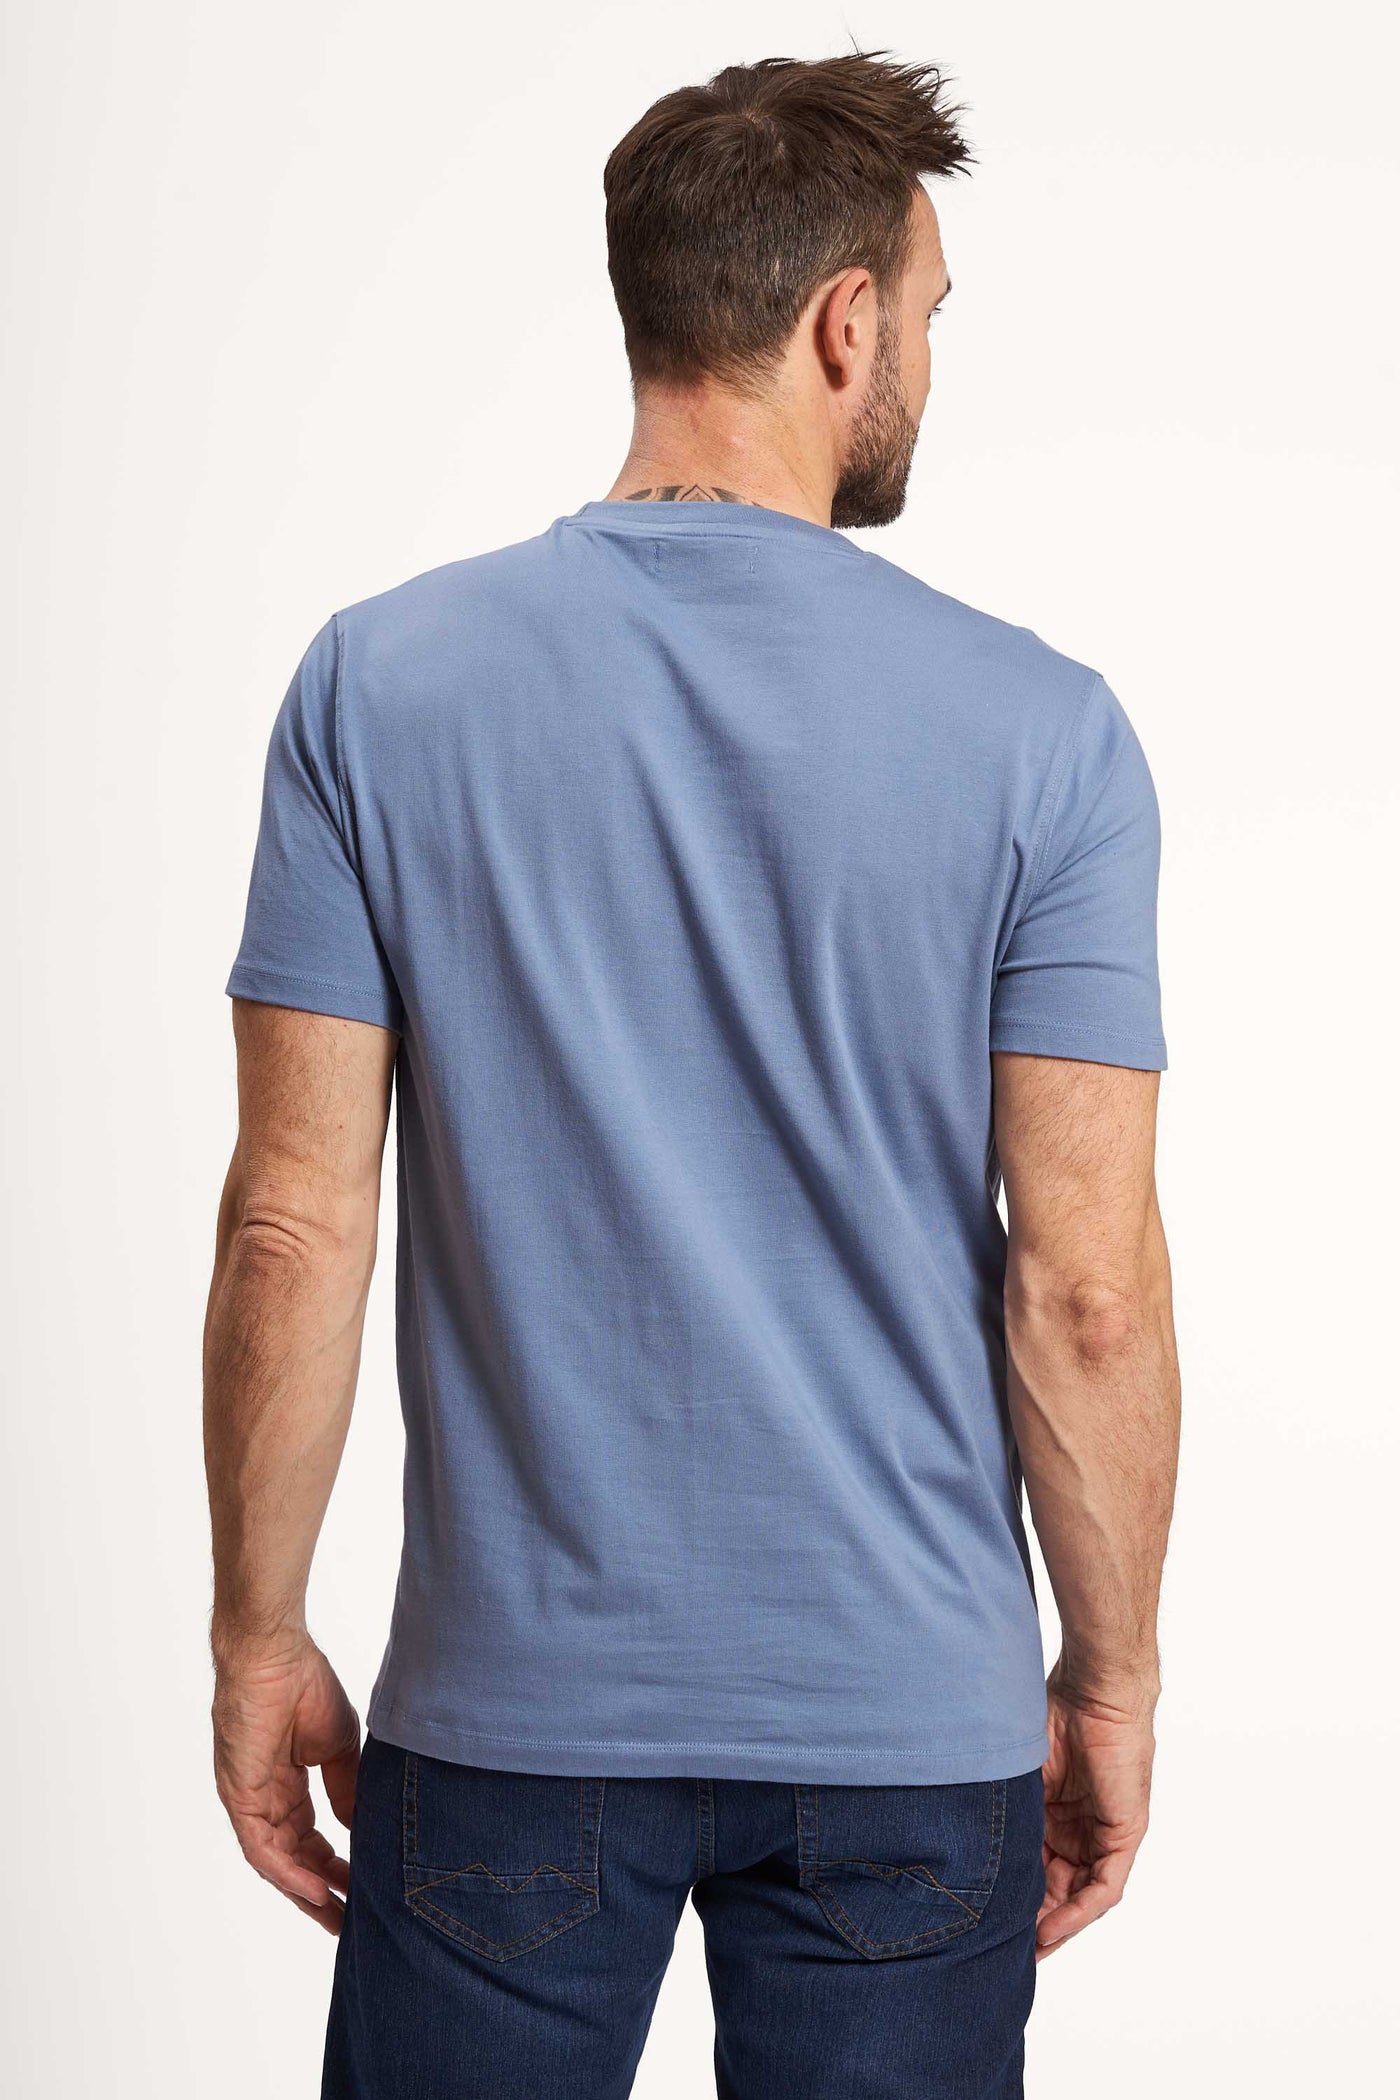 Logo T-Shirt 'Mern' - Coronot Blue